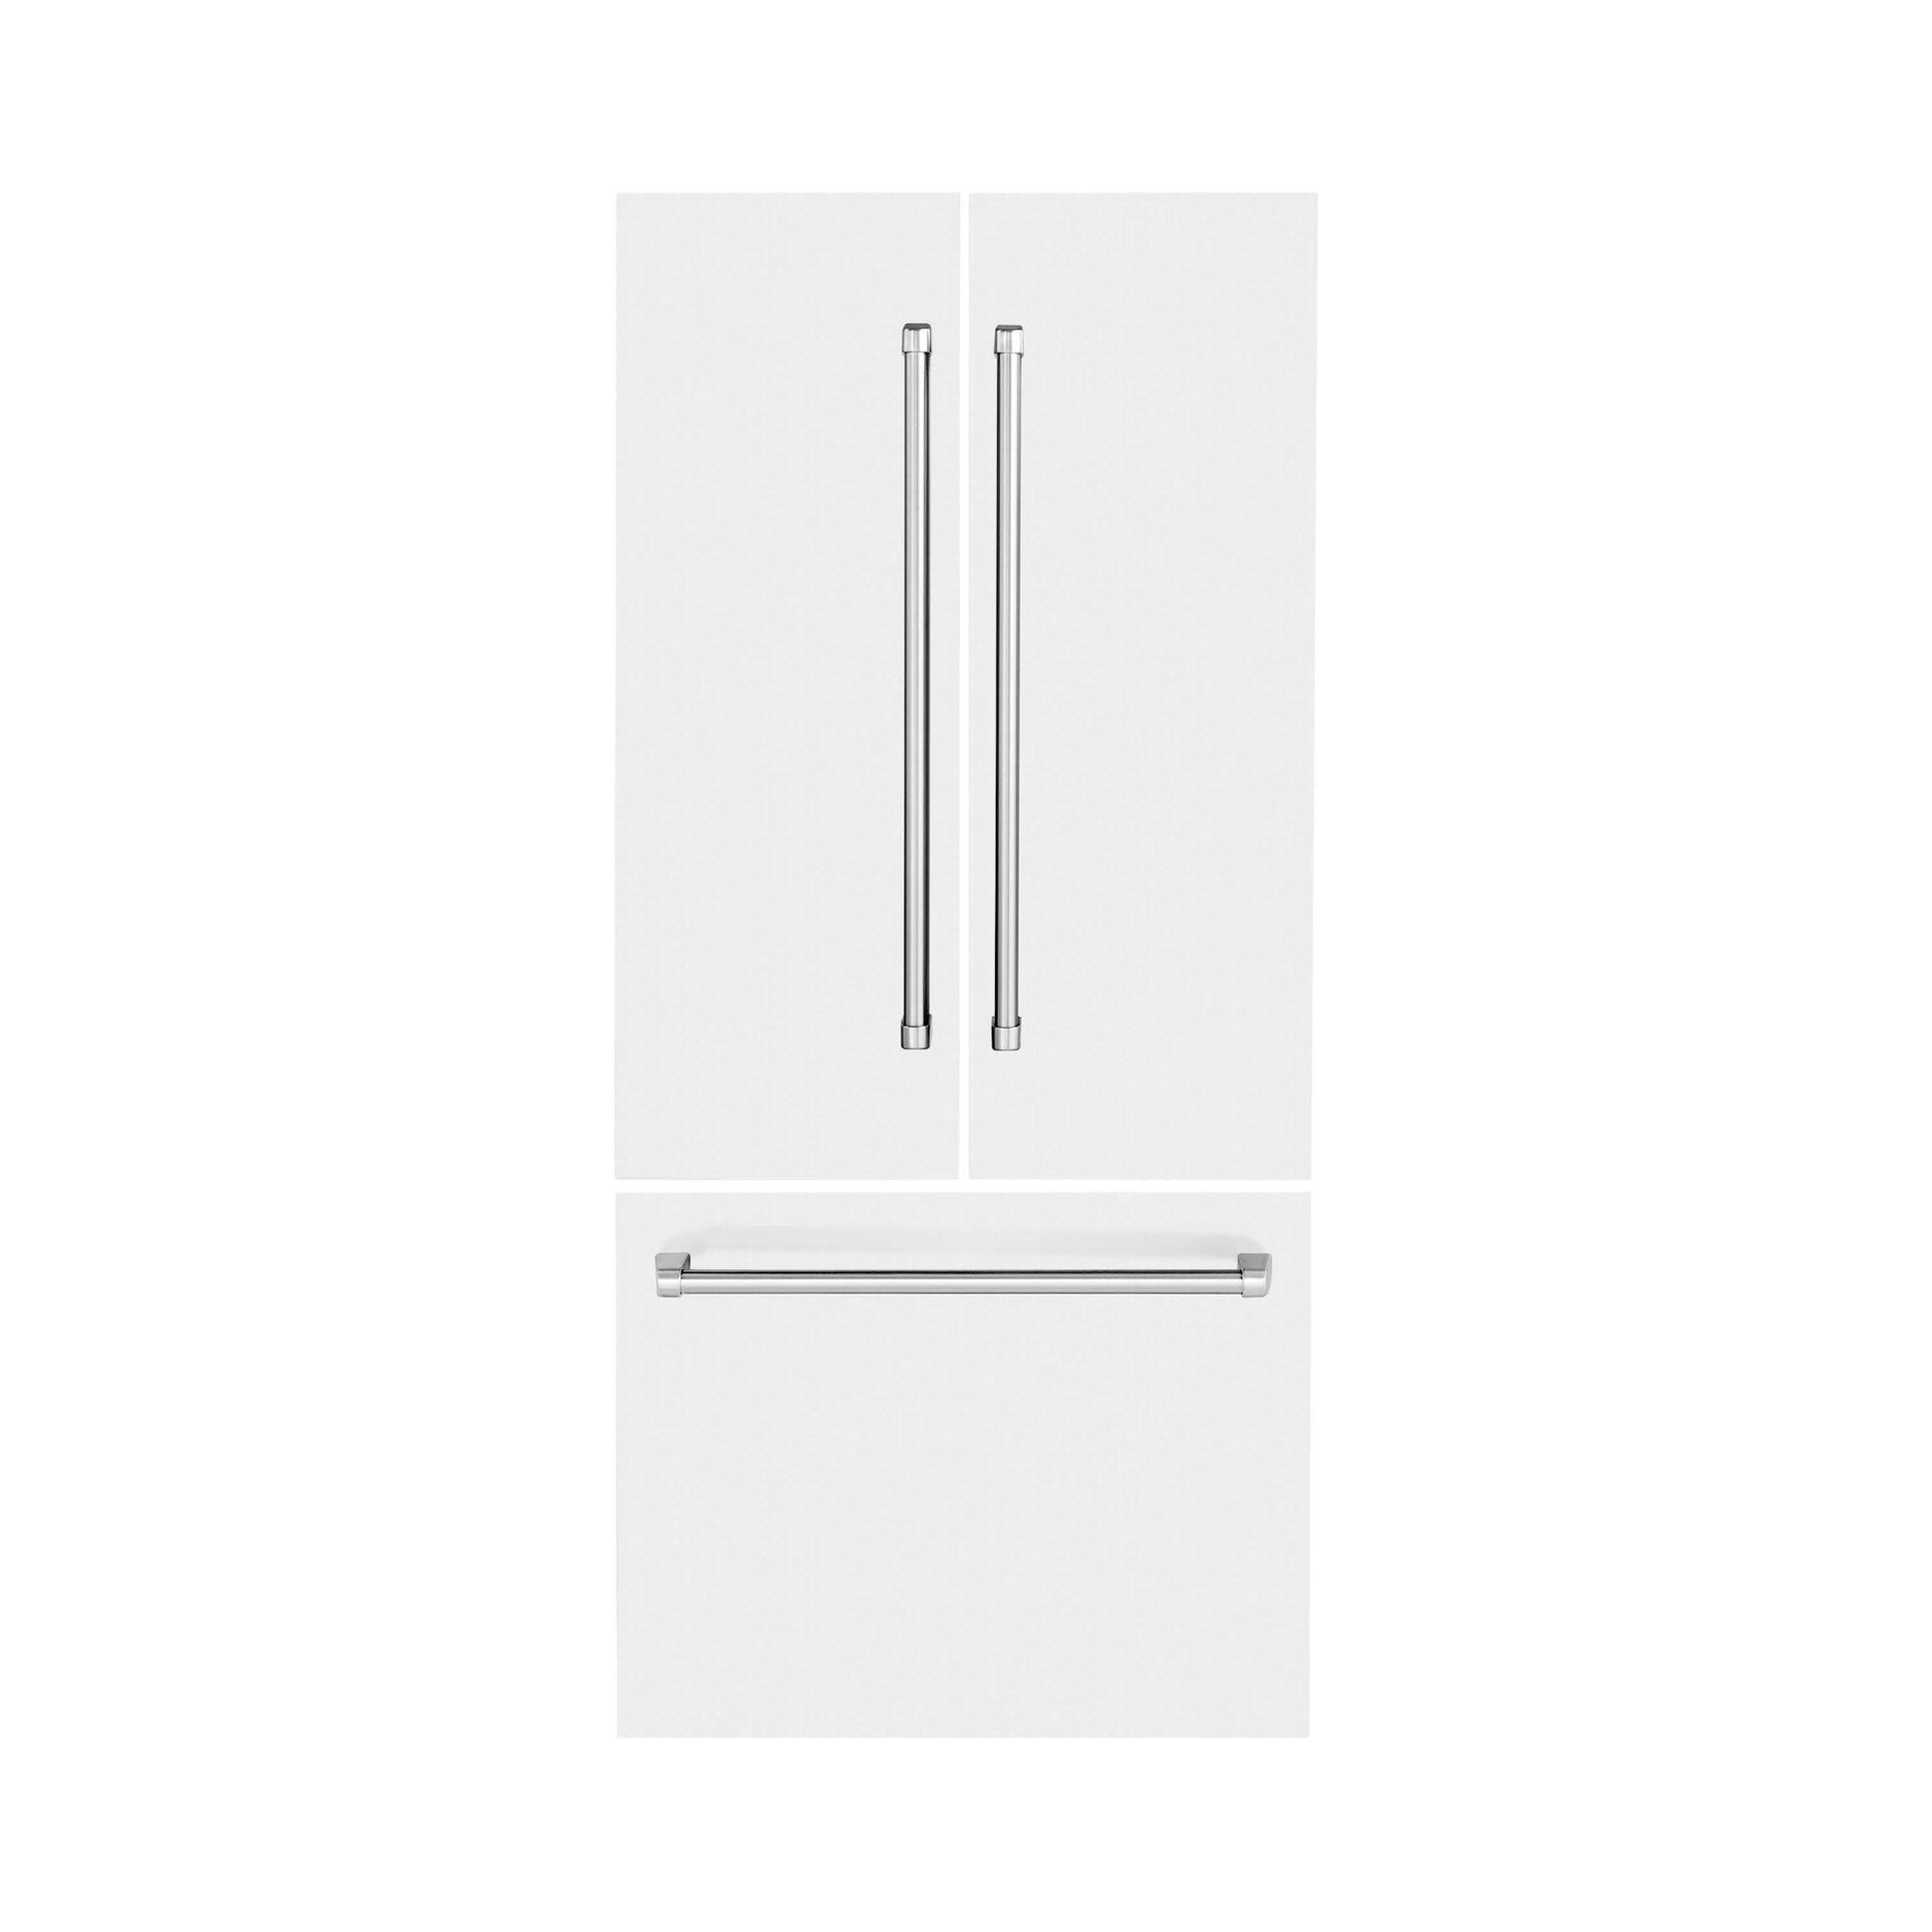 Panels & Handles Only - ZLINE 36" Refrigerator Panels in Matte White